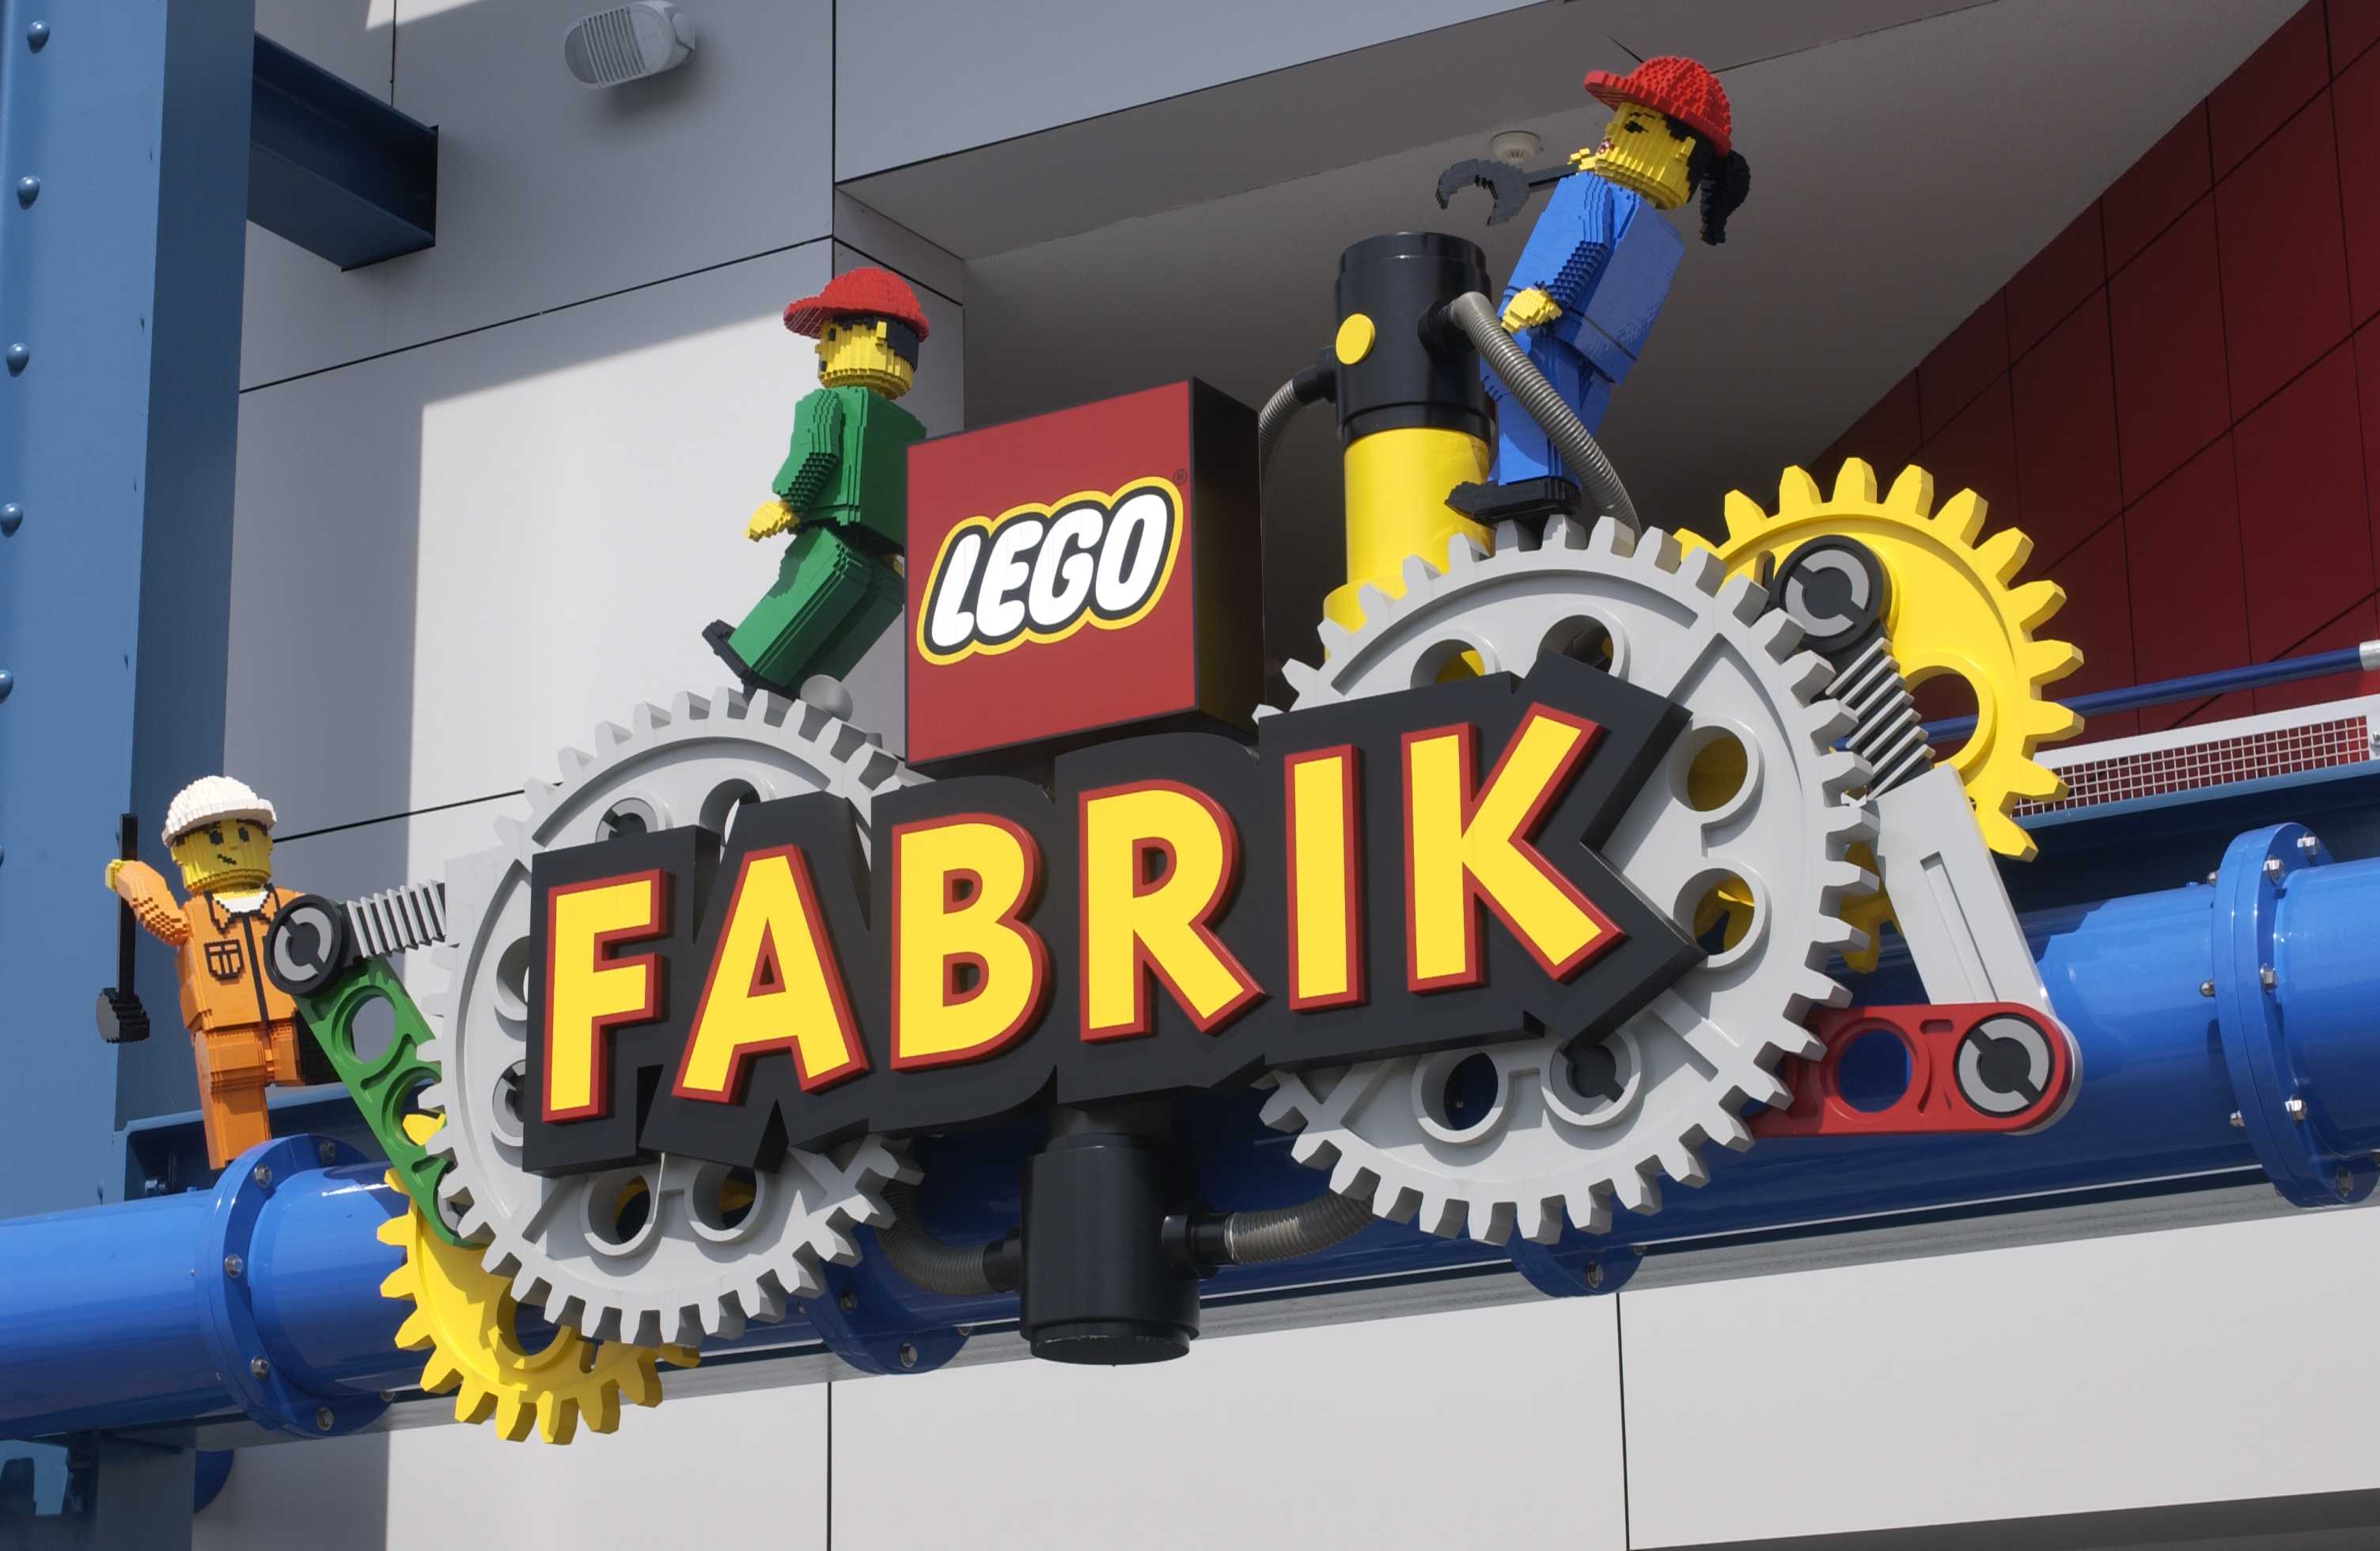 LEGOLAND LEGO Fabrik